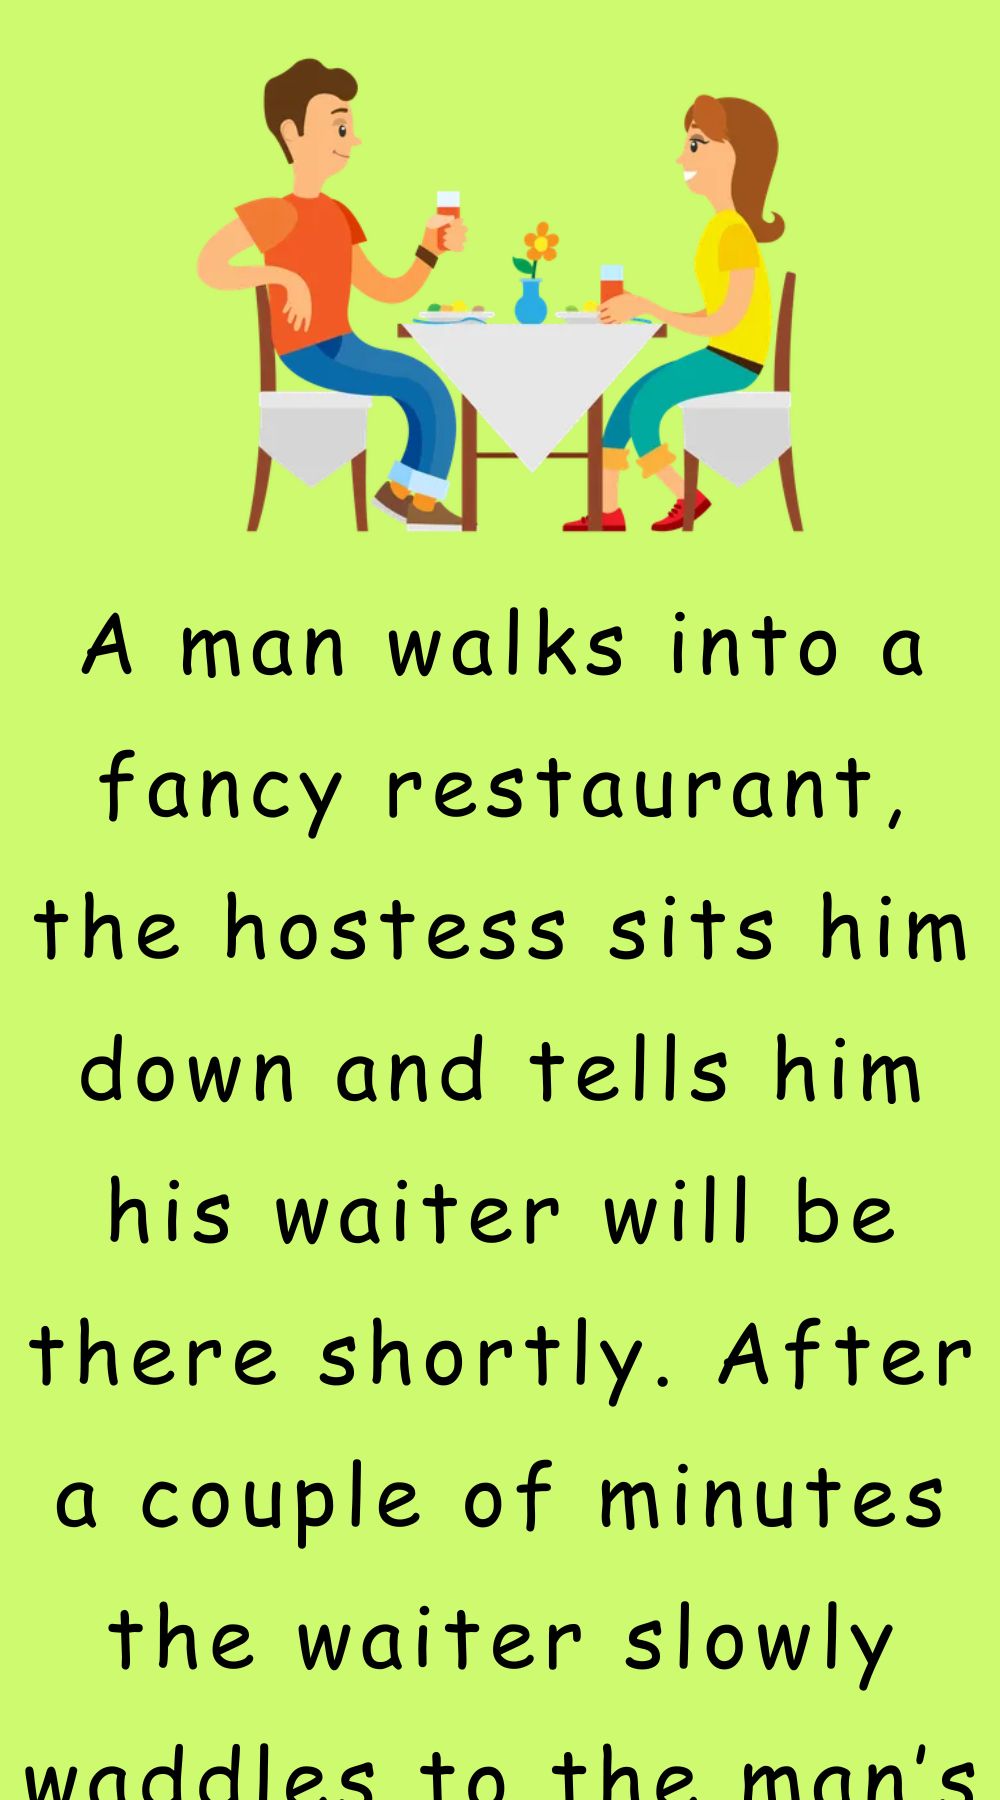 A man walks into a fancy restaurant